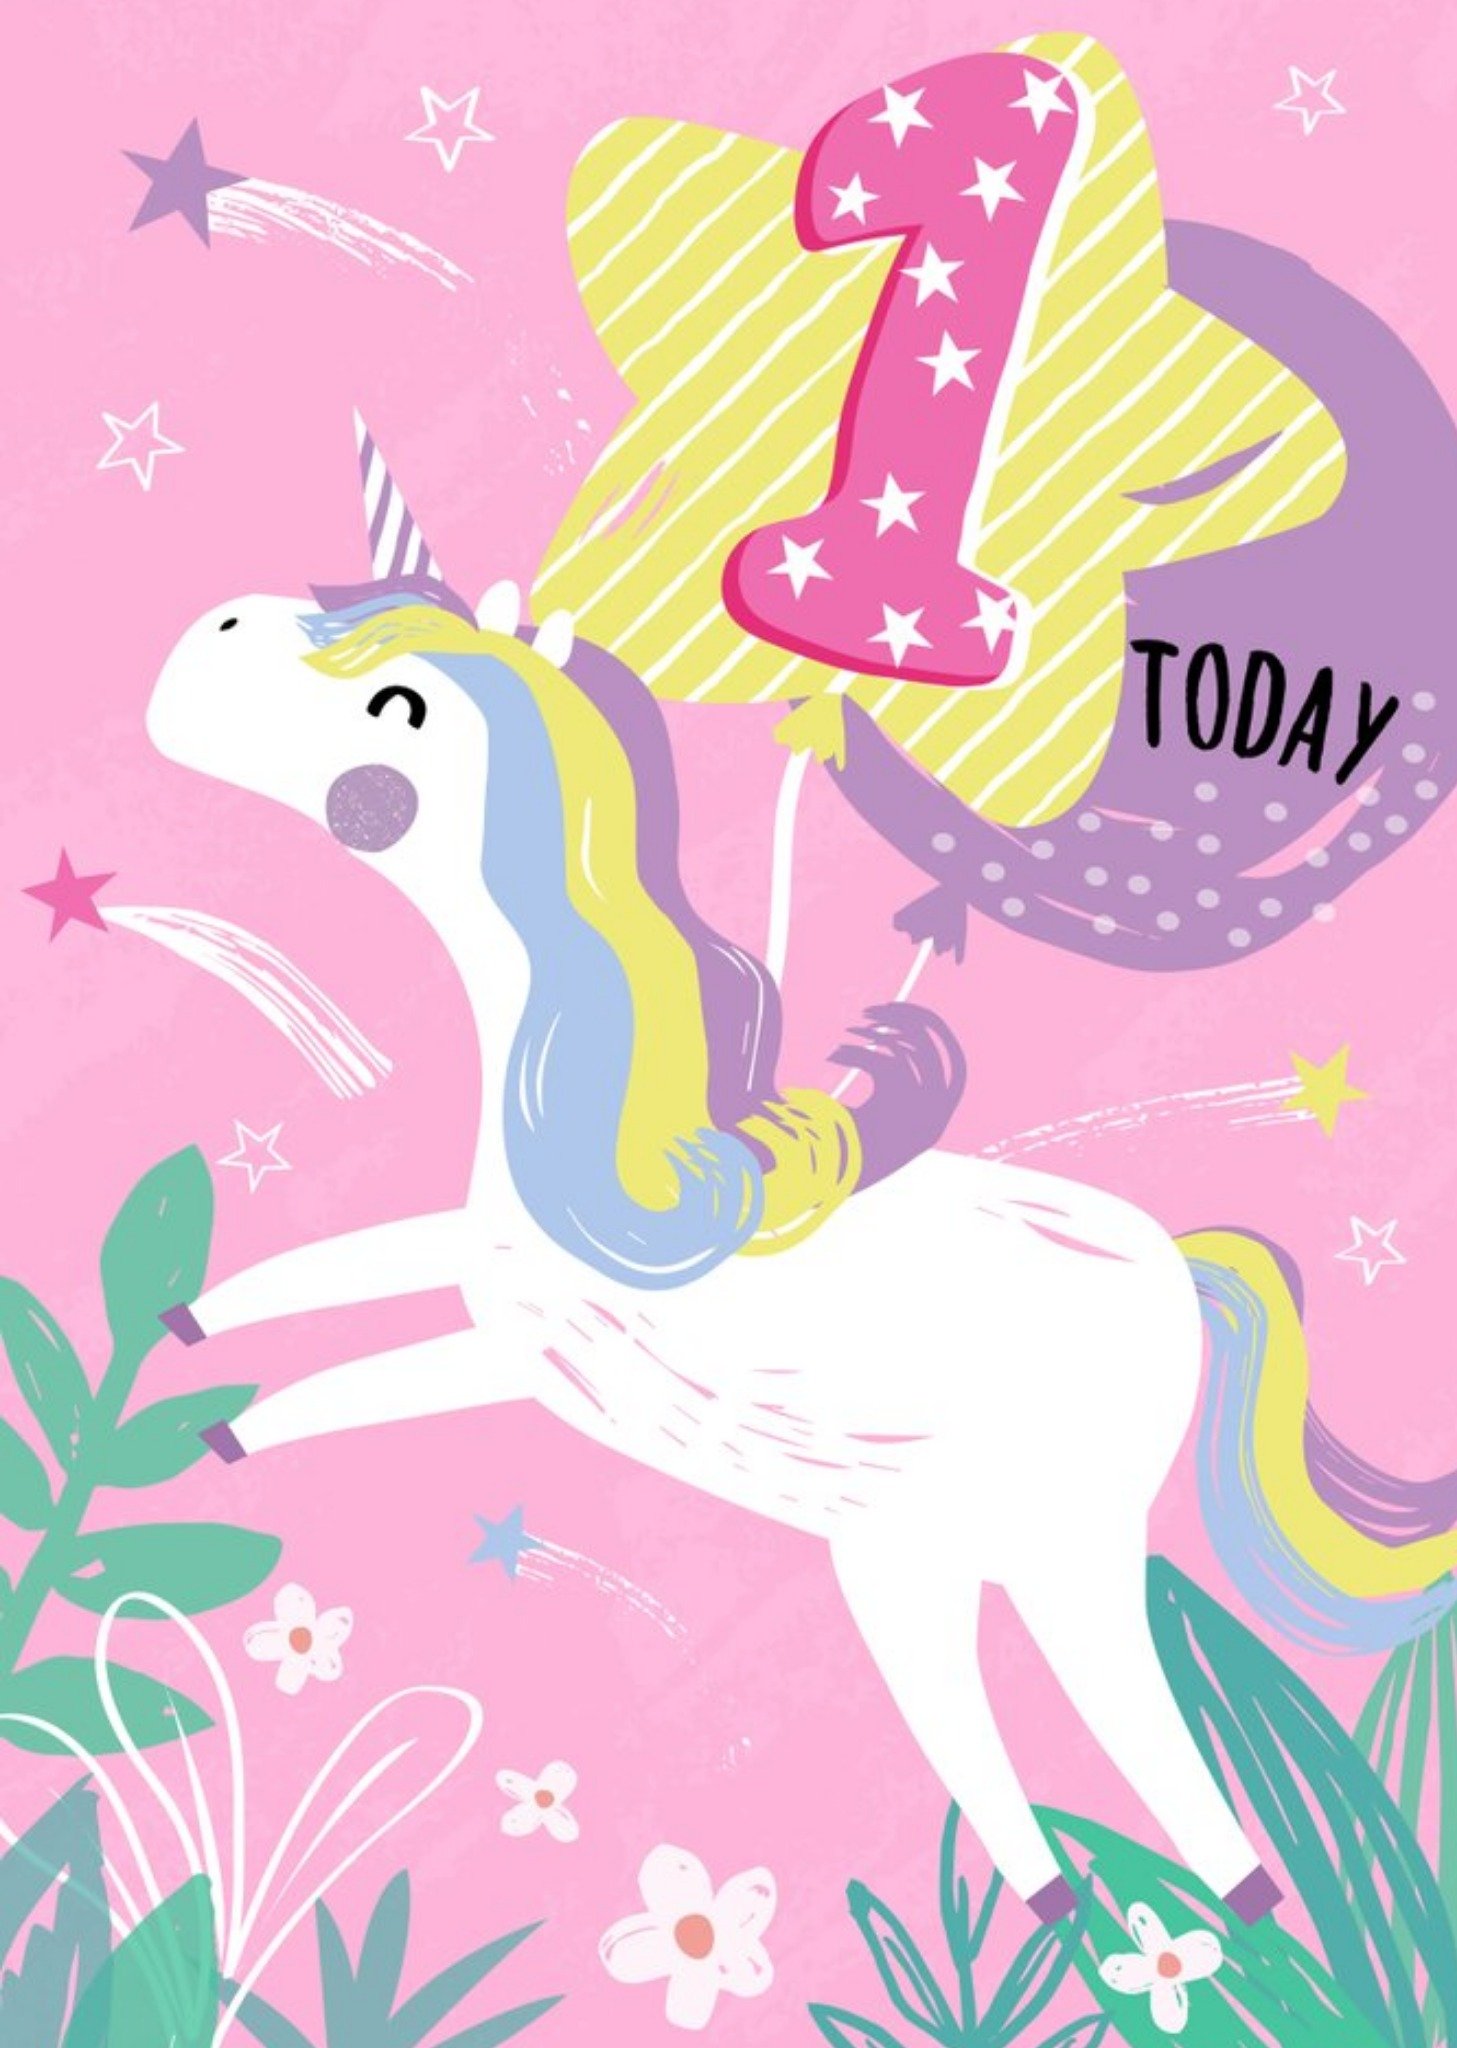 Moonpig Cute Illustrated Unicorn 1 Today Birthday Card, Large